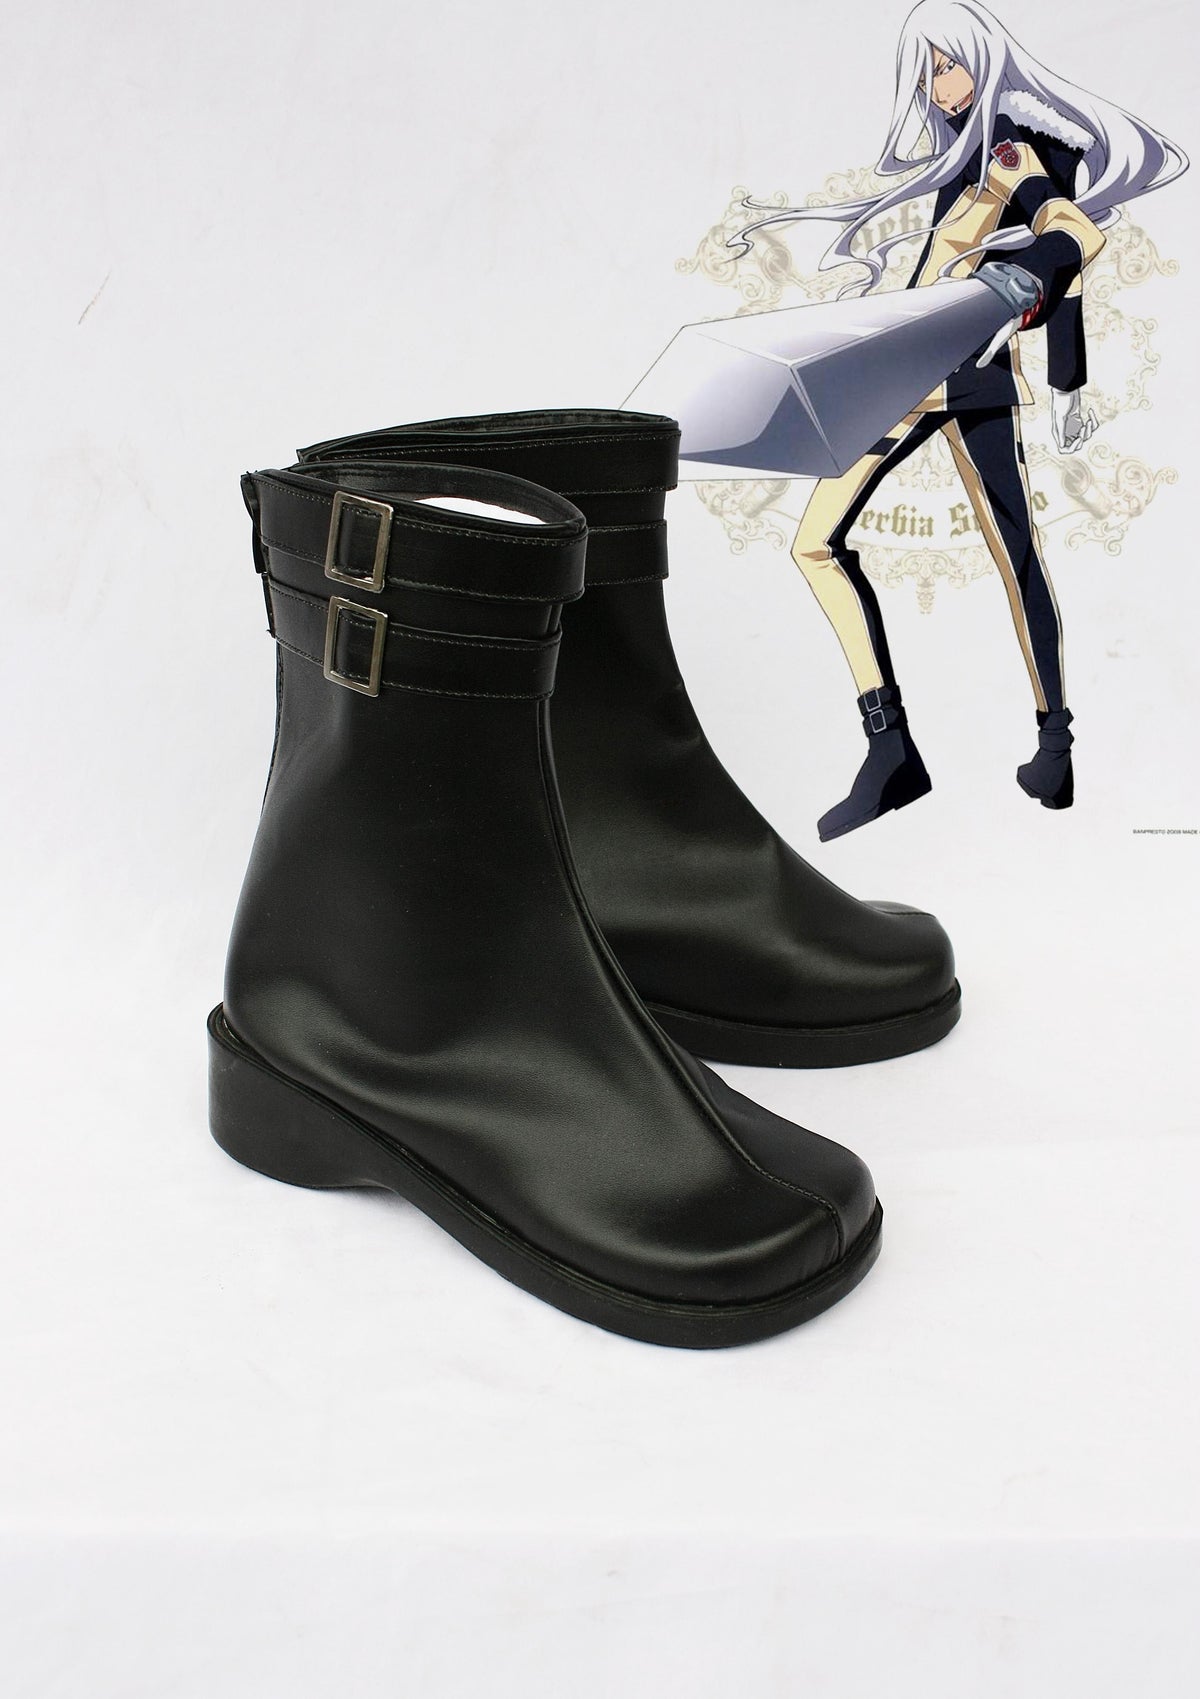 Kato Hitman Reborn Superbi Squalo Cosplay Shoes Boots